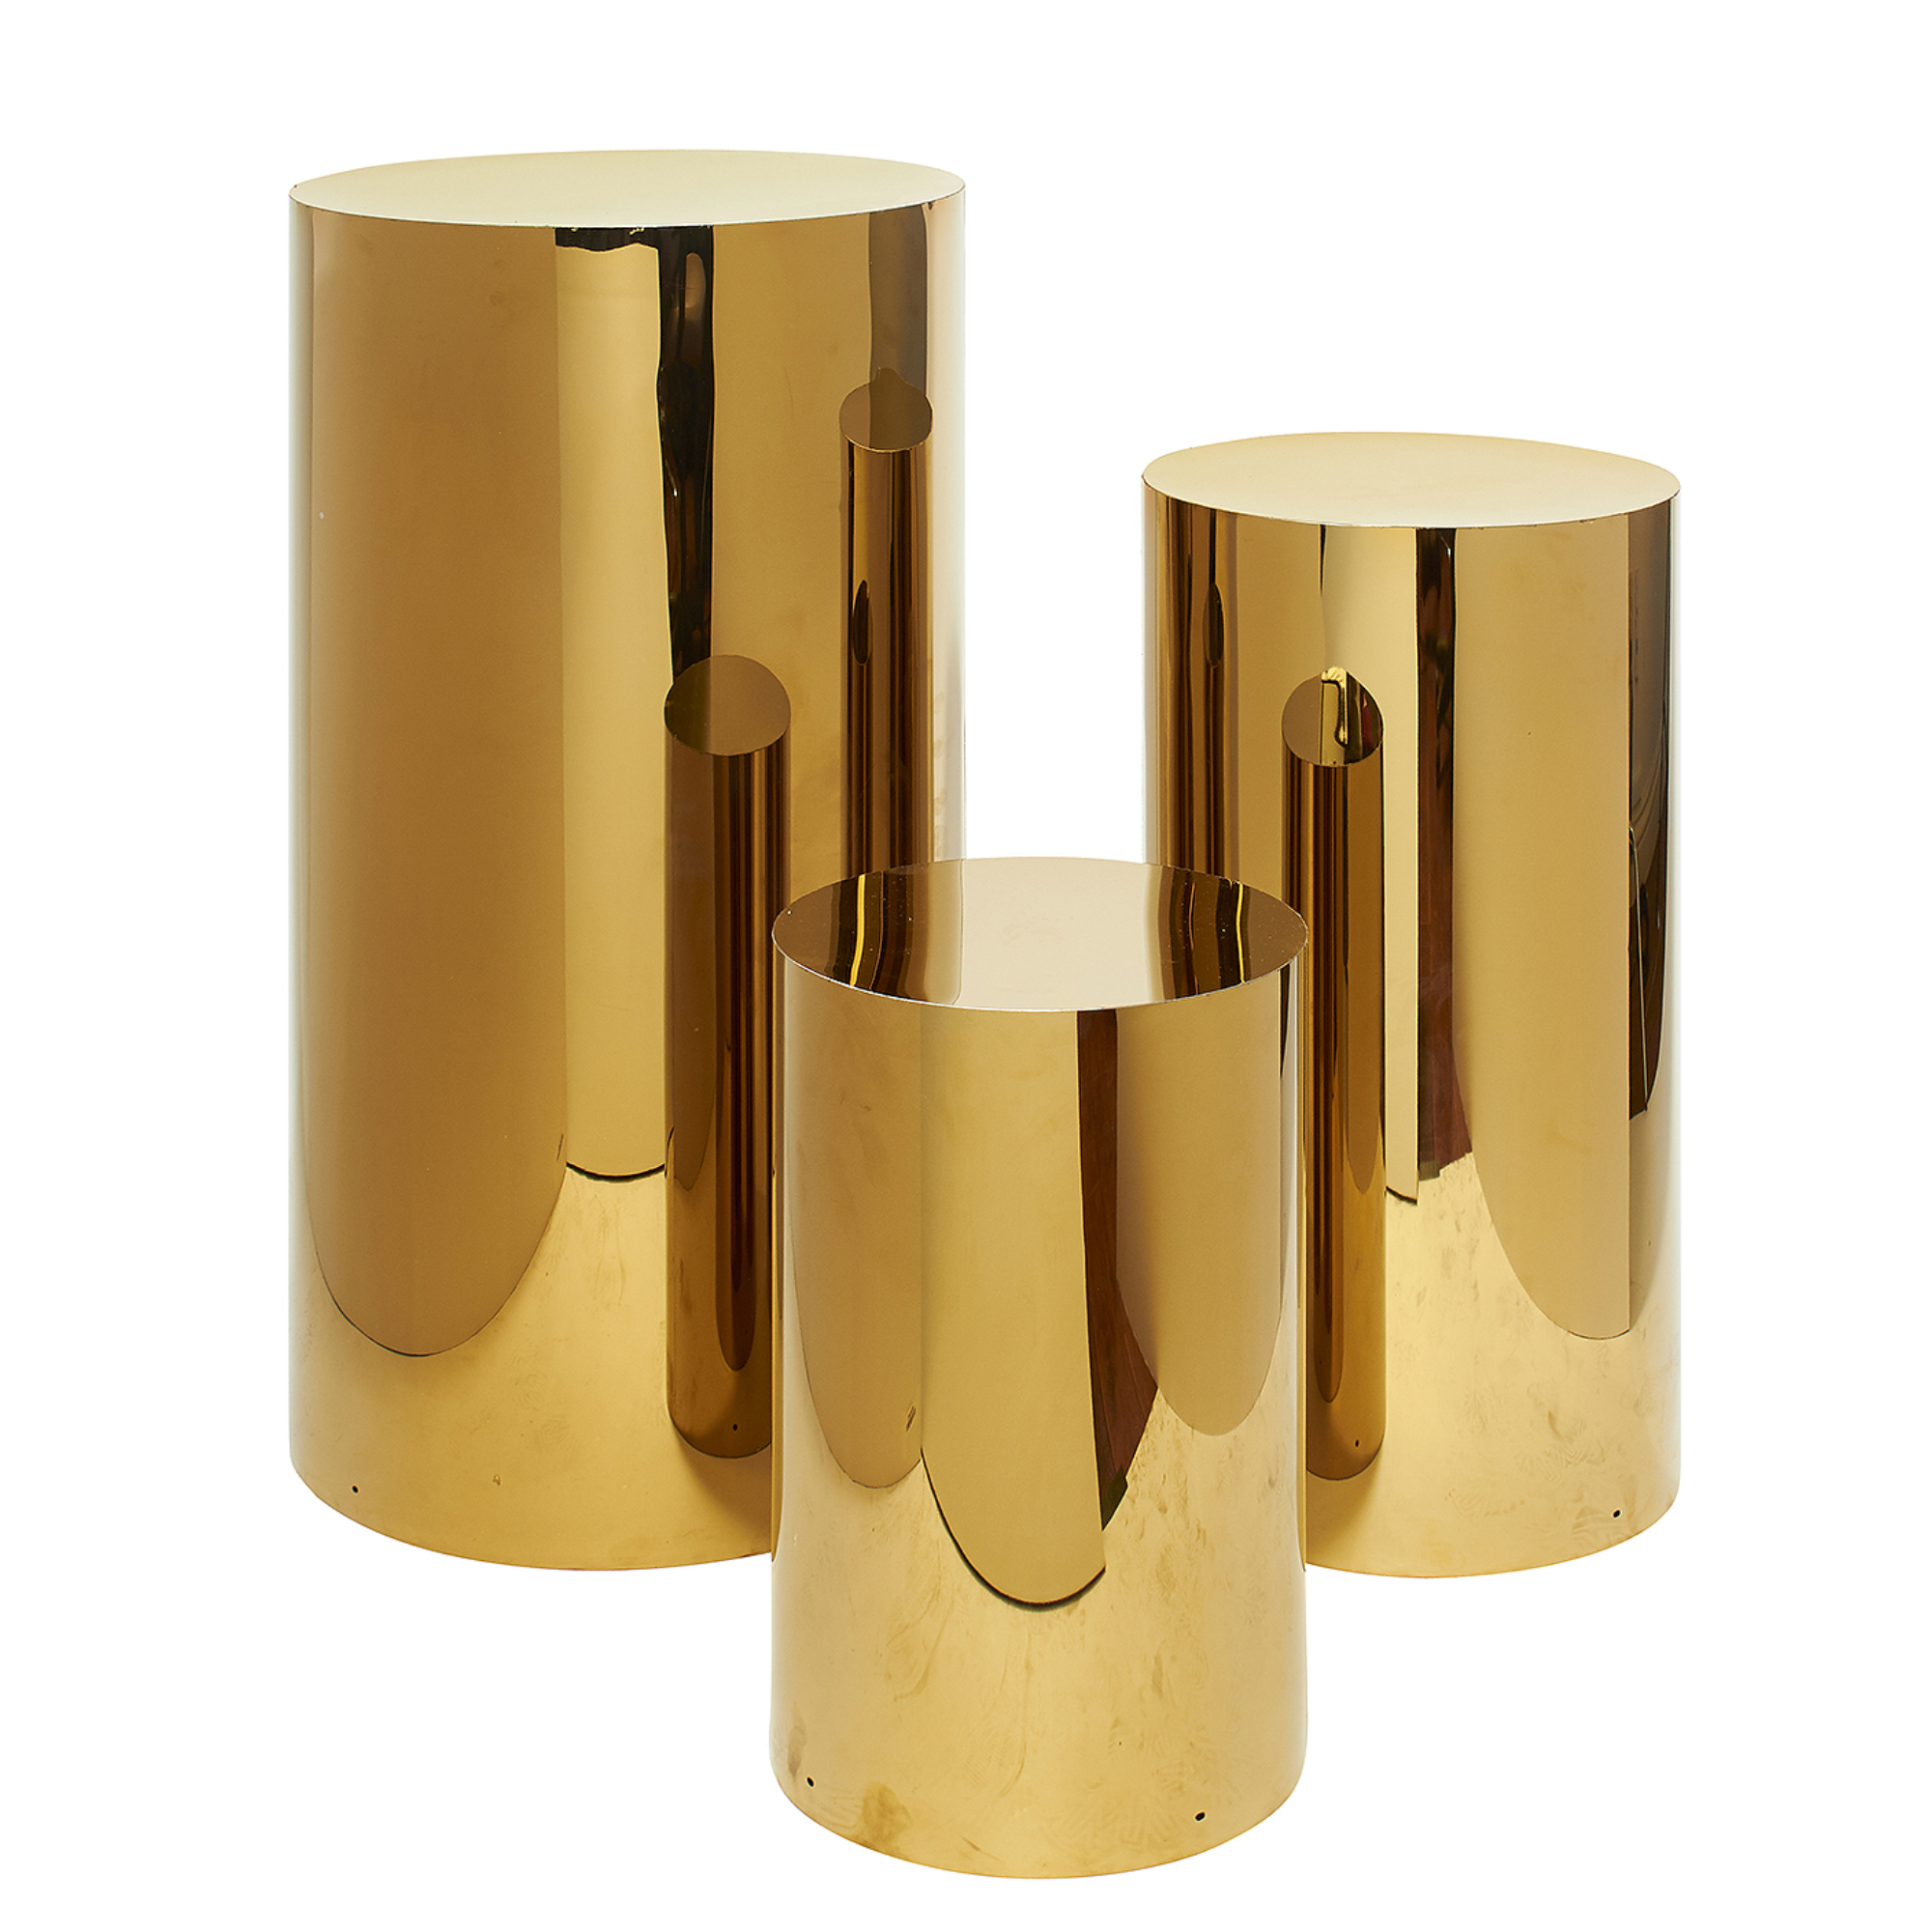 Metal Cylinder Pedestals Display 3pc/set - Gold